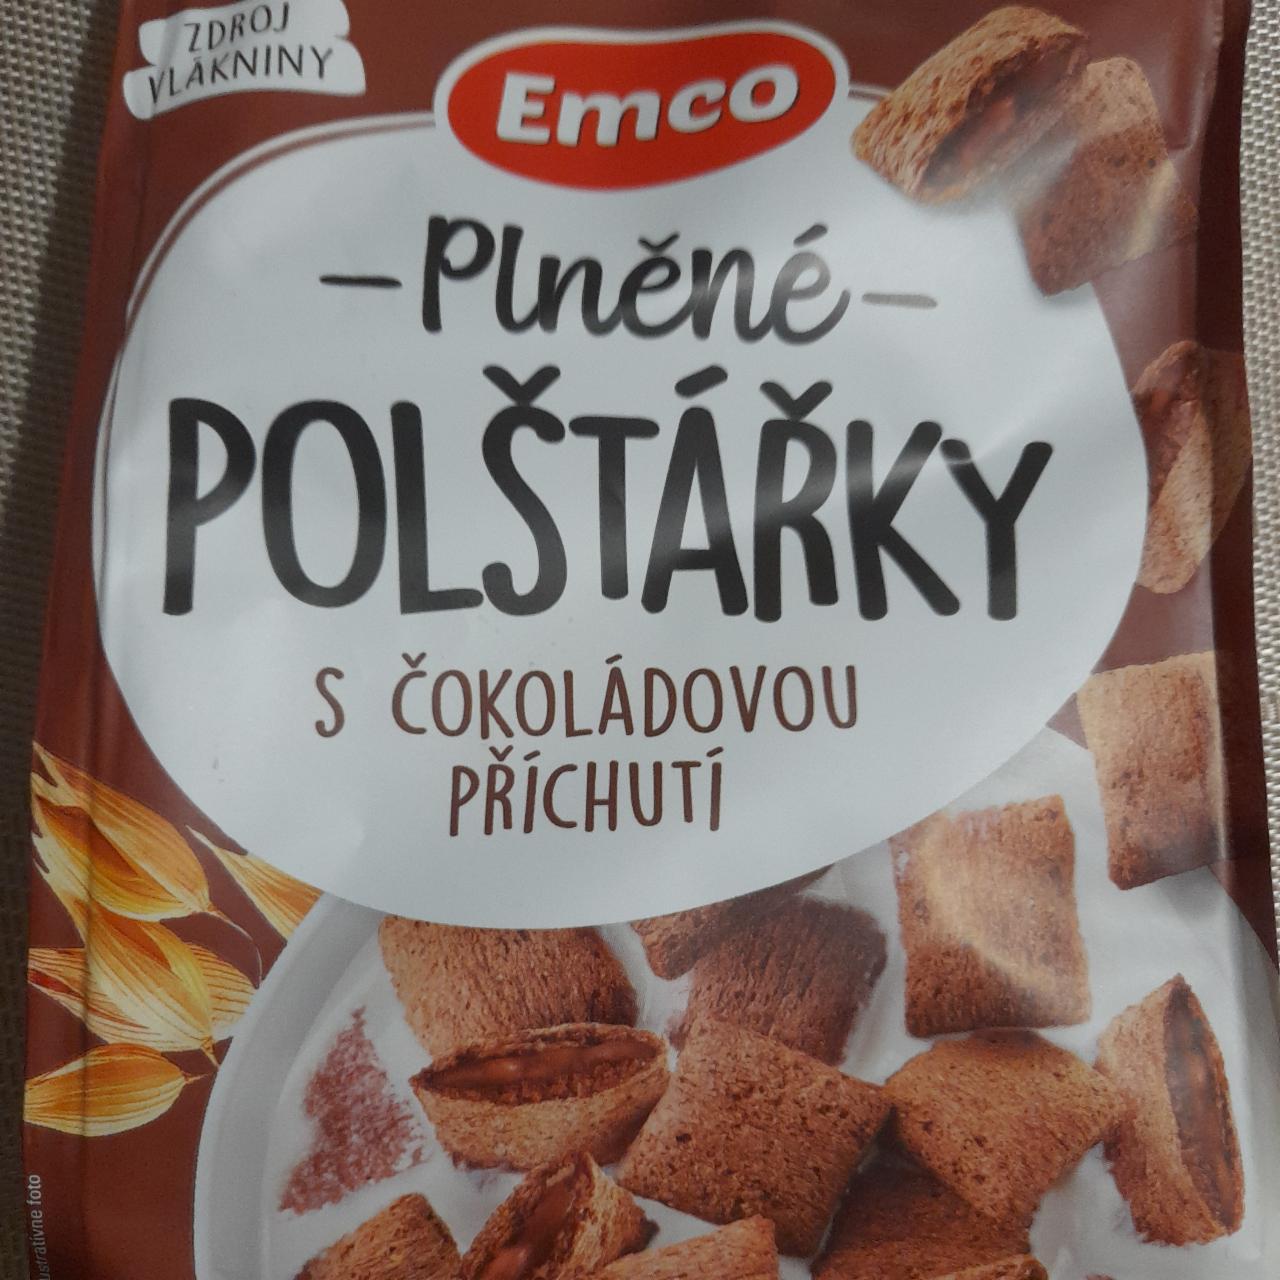 Fotografie - Polštářky s čokoládovou príchutí Emco